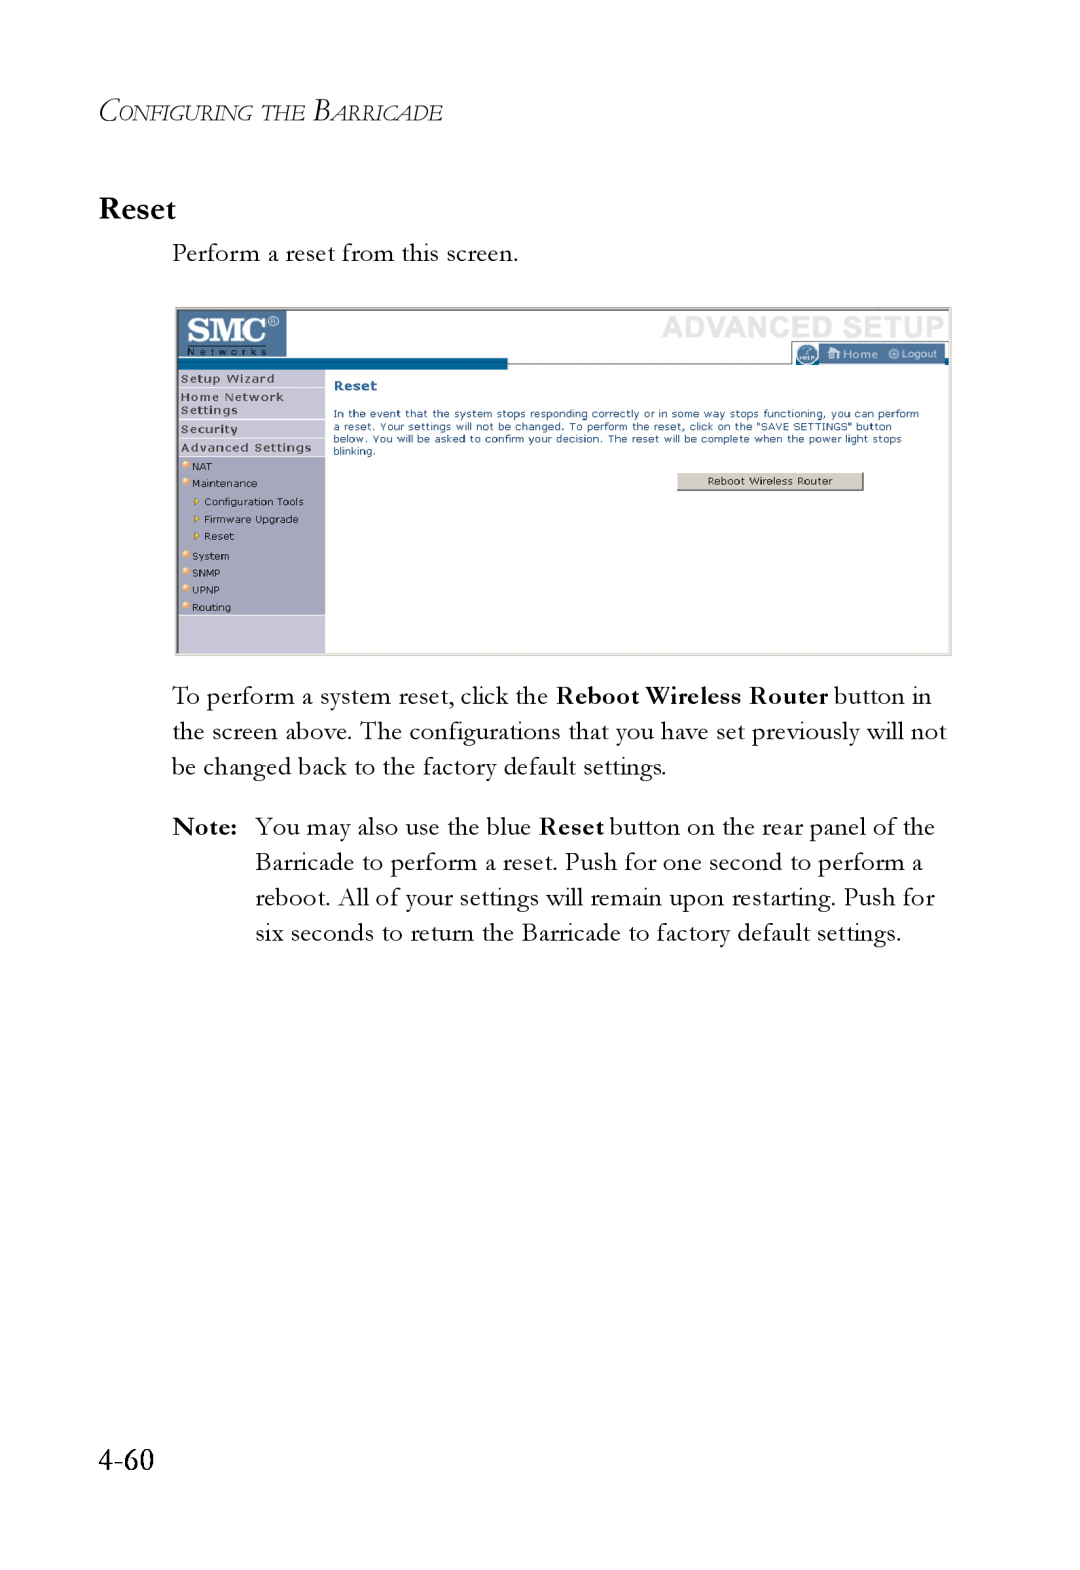 SMC Networks SMCWBR14T-G manual 4-60, Reset 